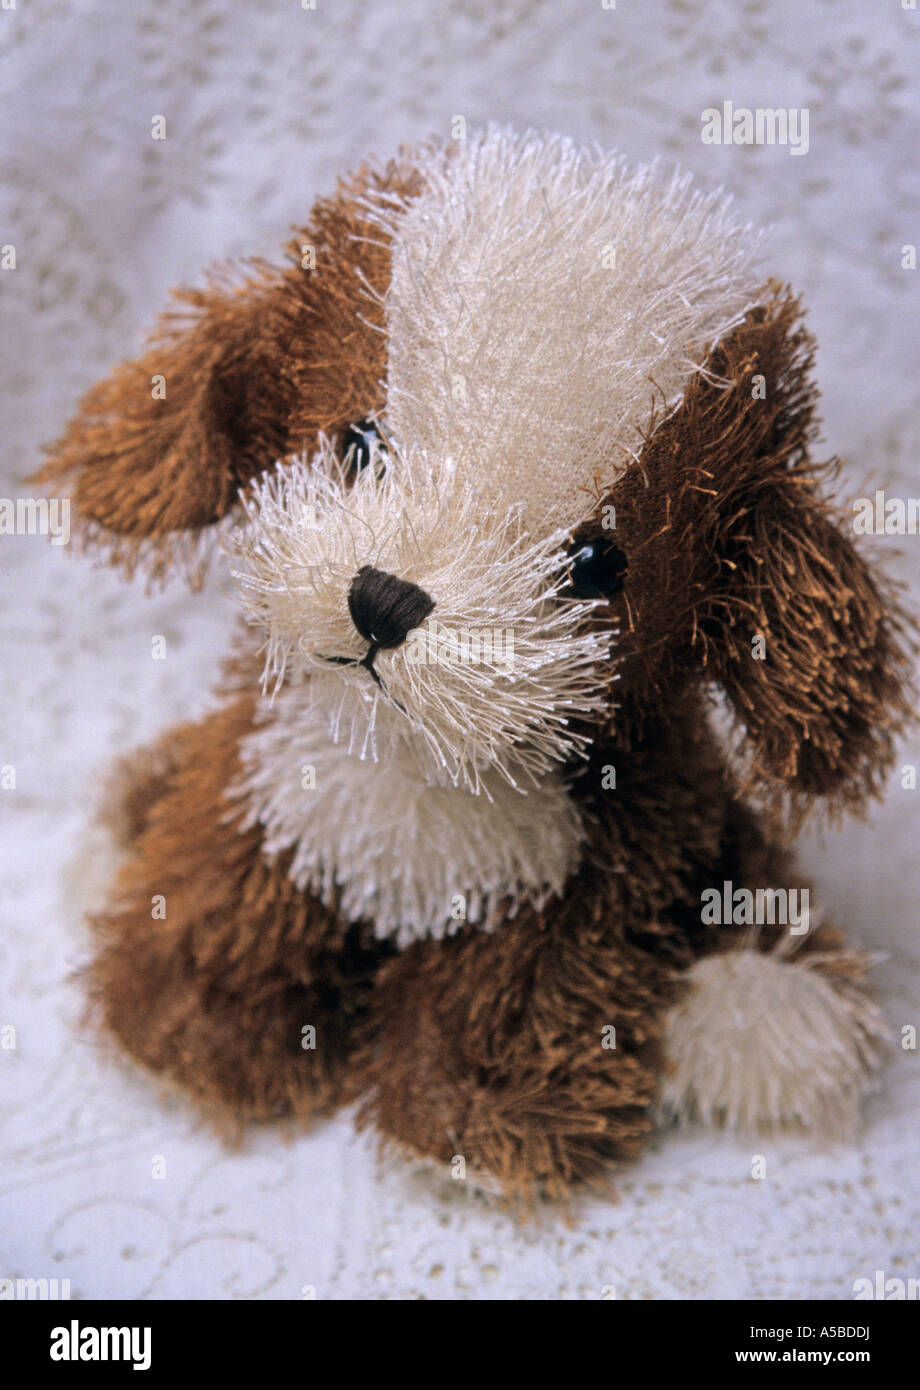 cute cuddly toy dog Stock Photo